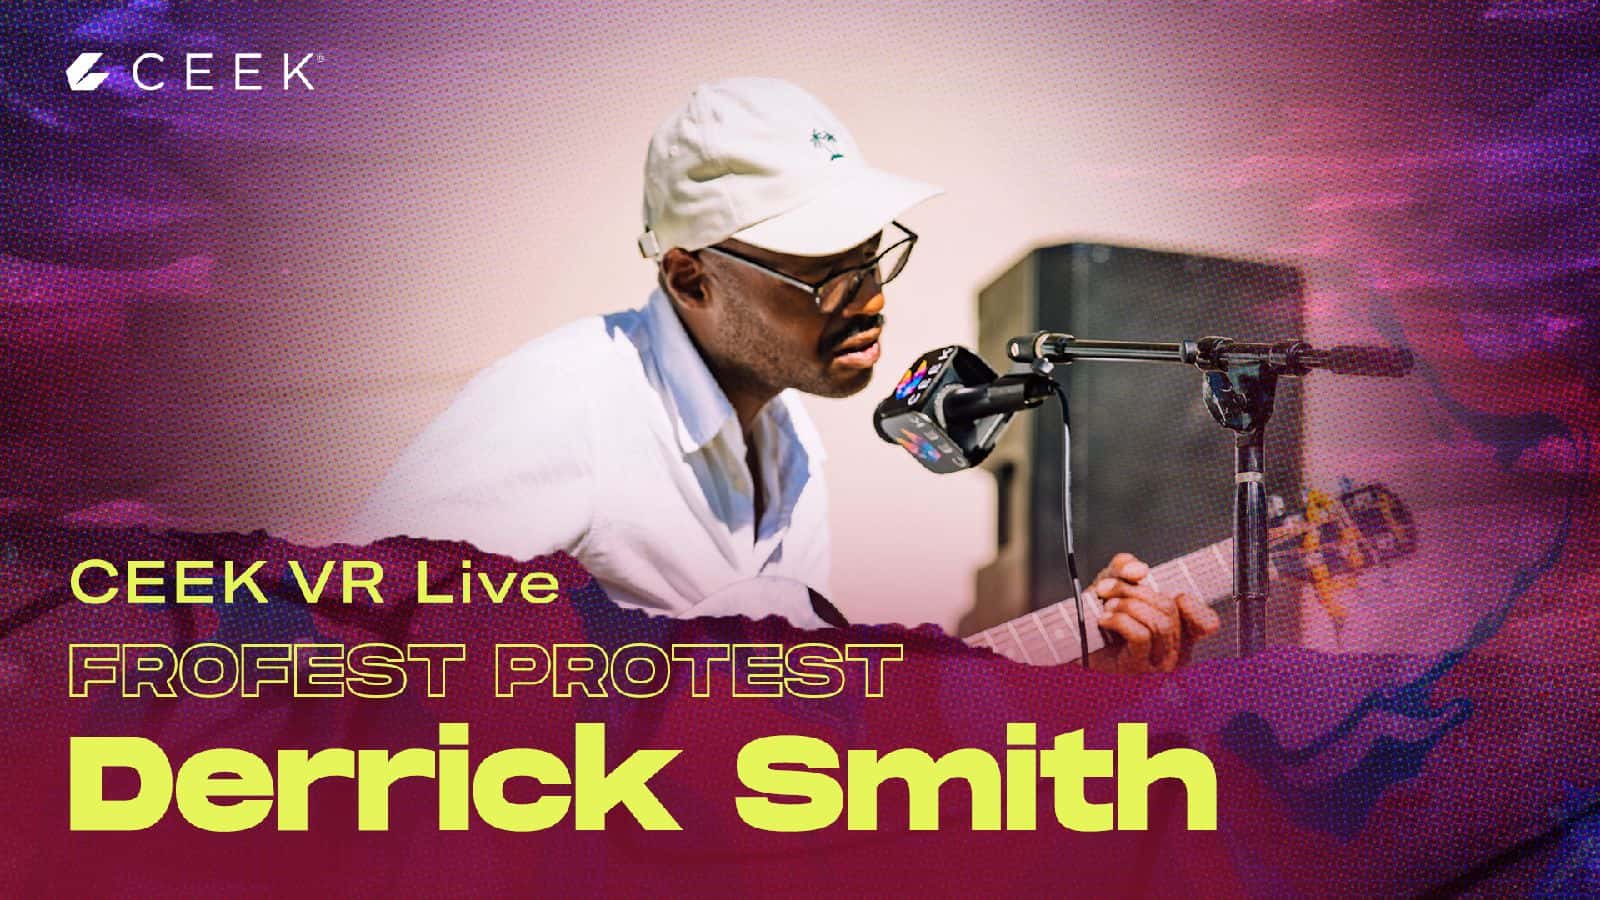 FROFEST Derrick Smith - Live